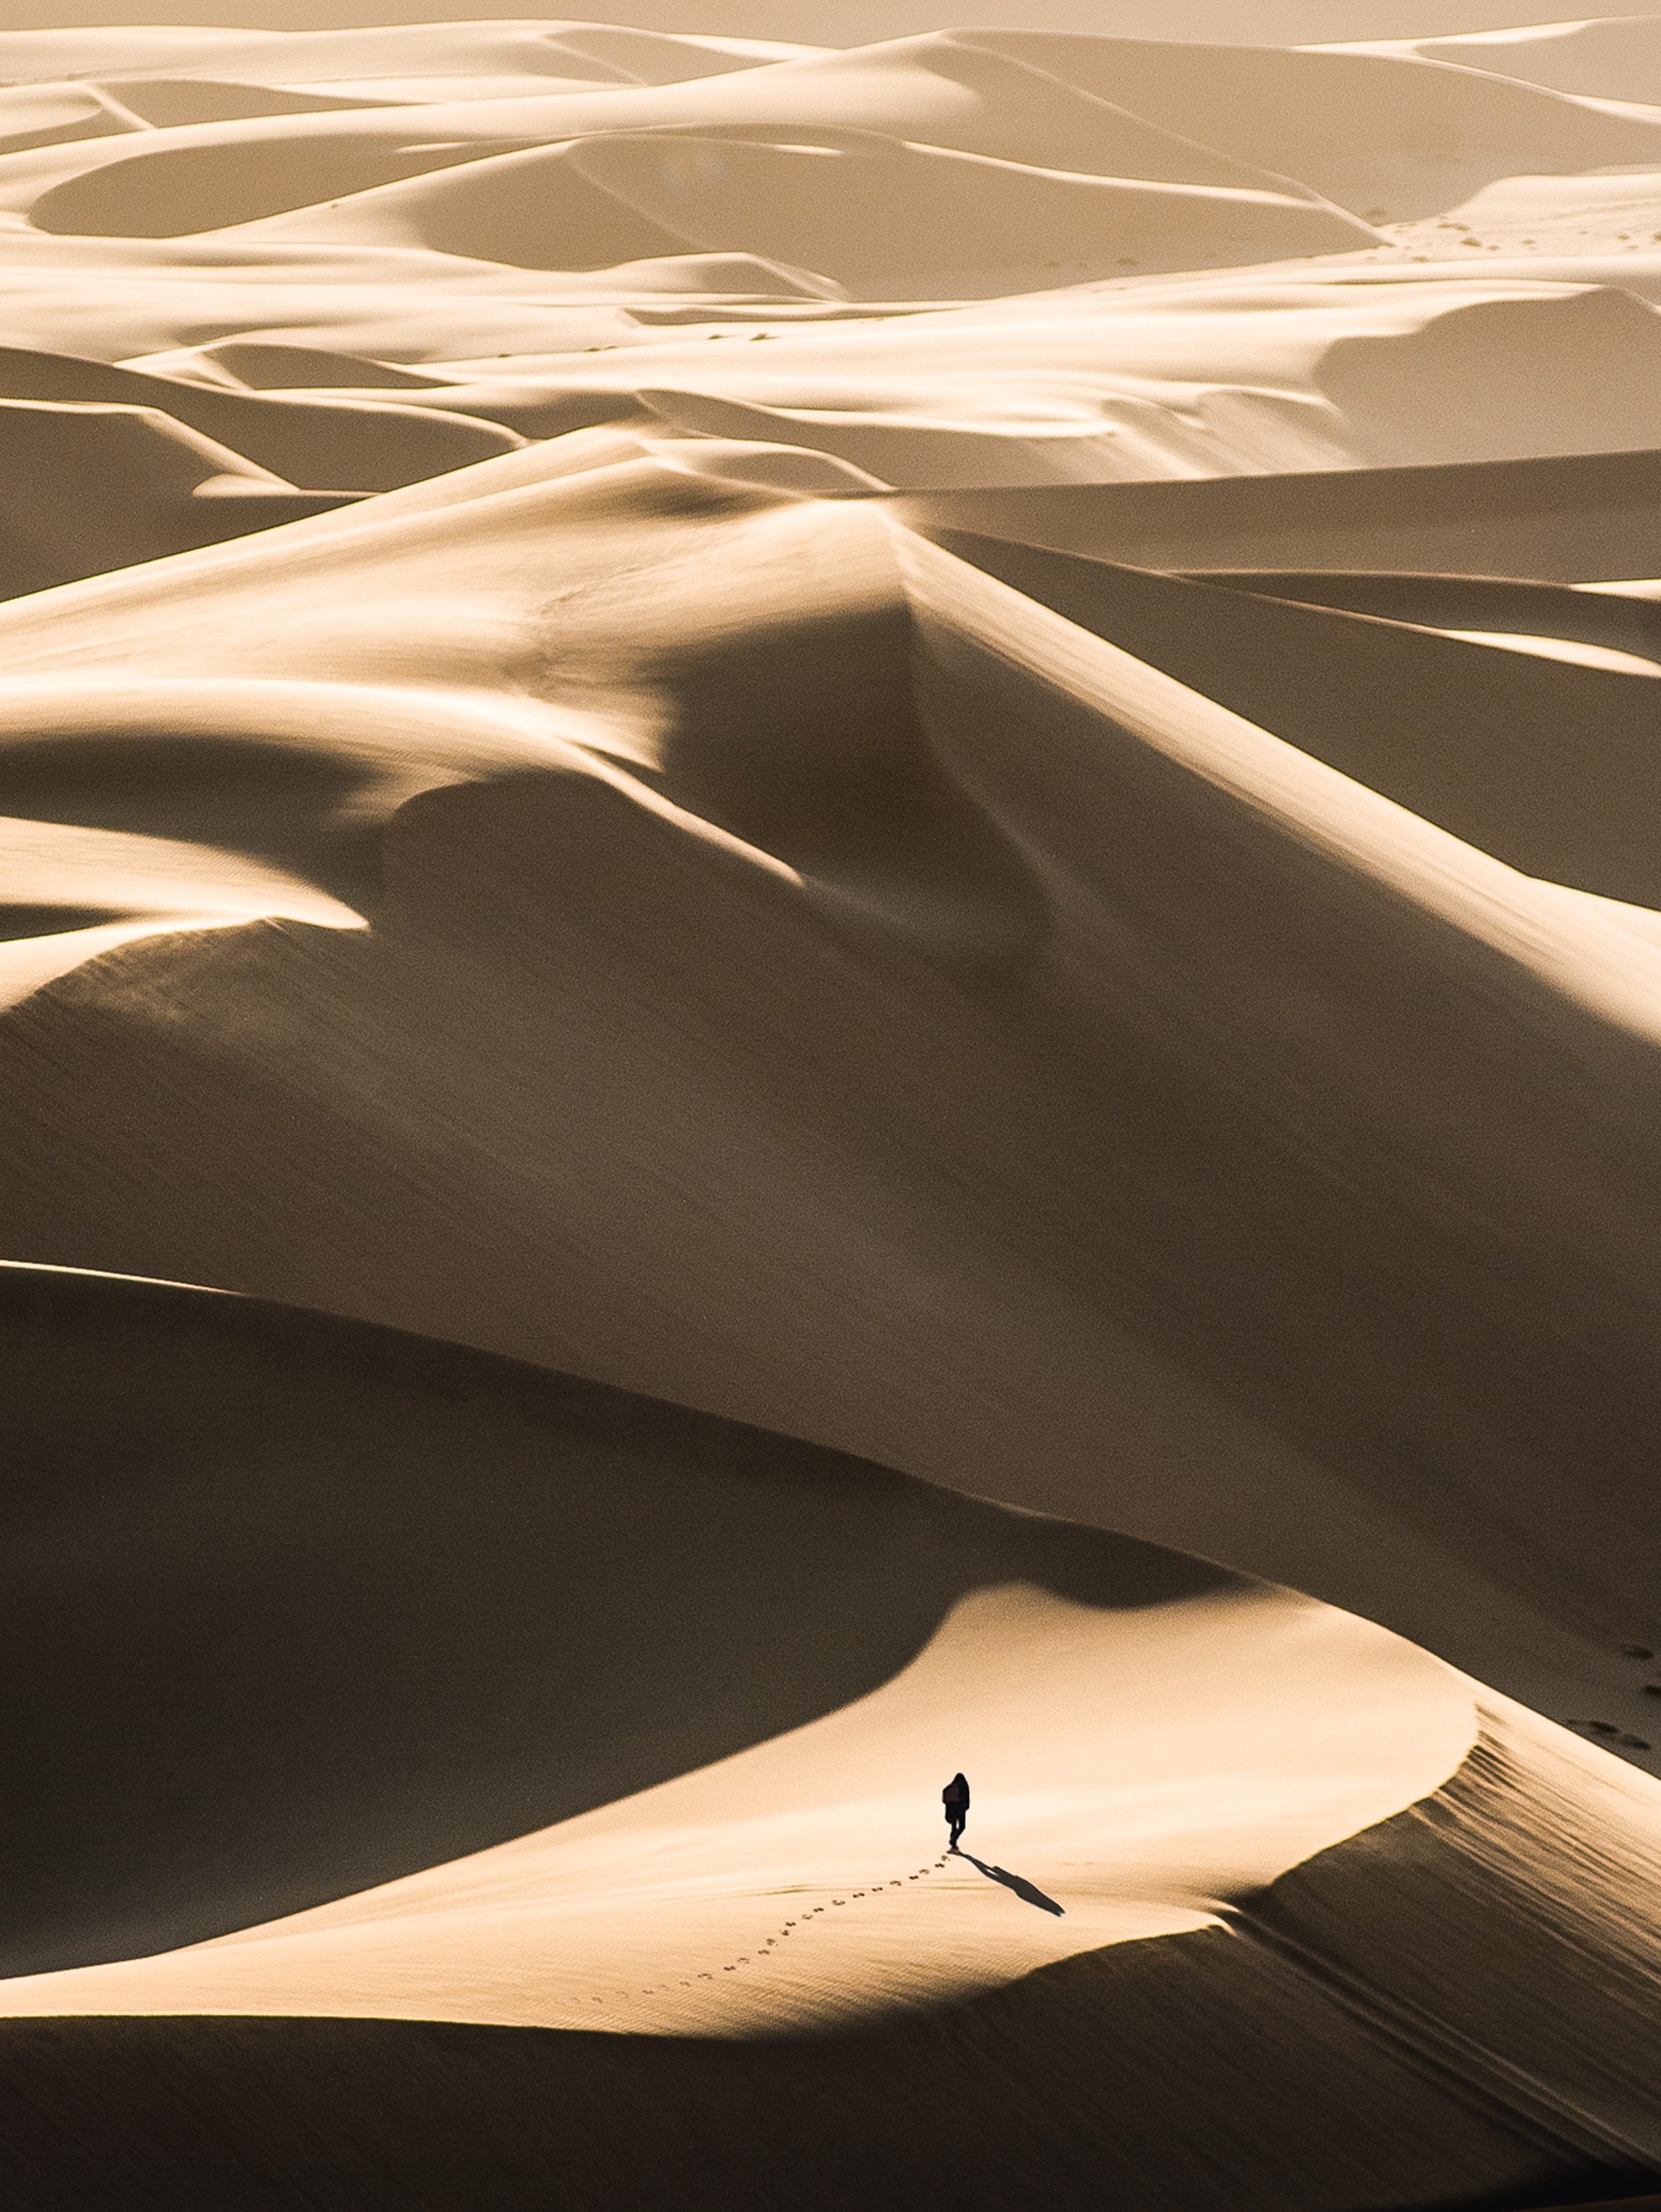 links, desert, nature, sand, silhouette, alone, lonely, dunes, wanderer